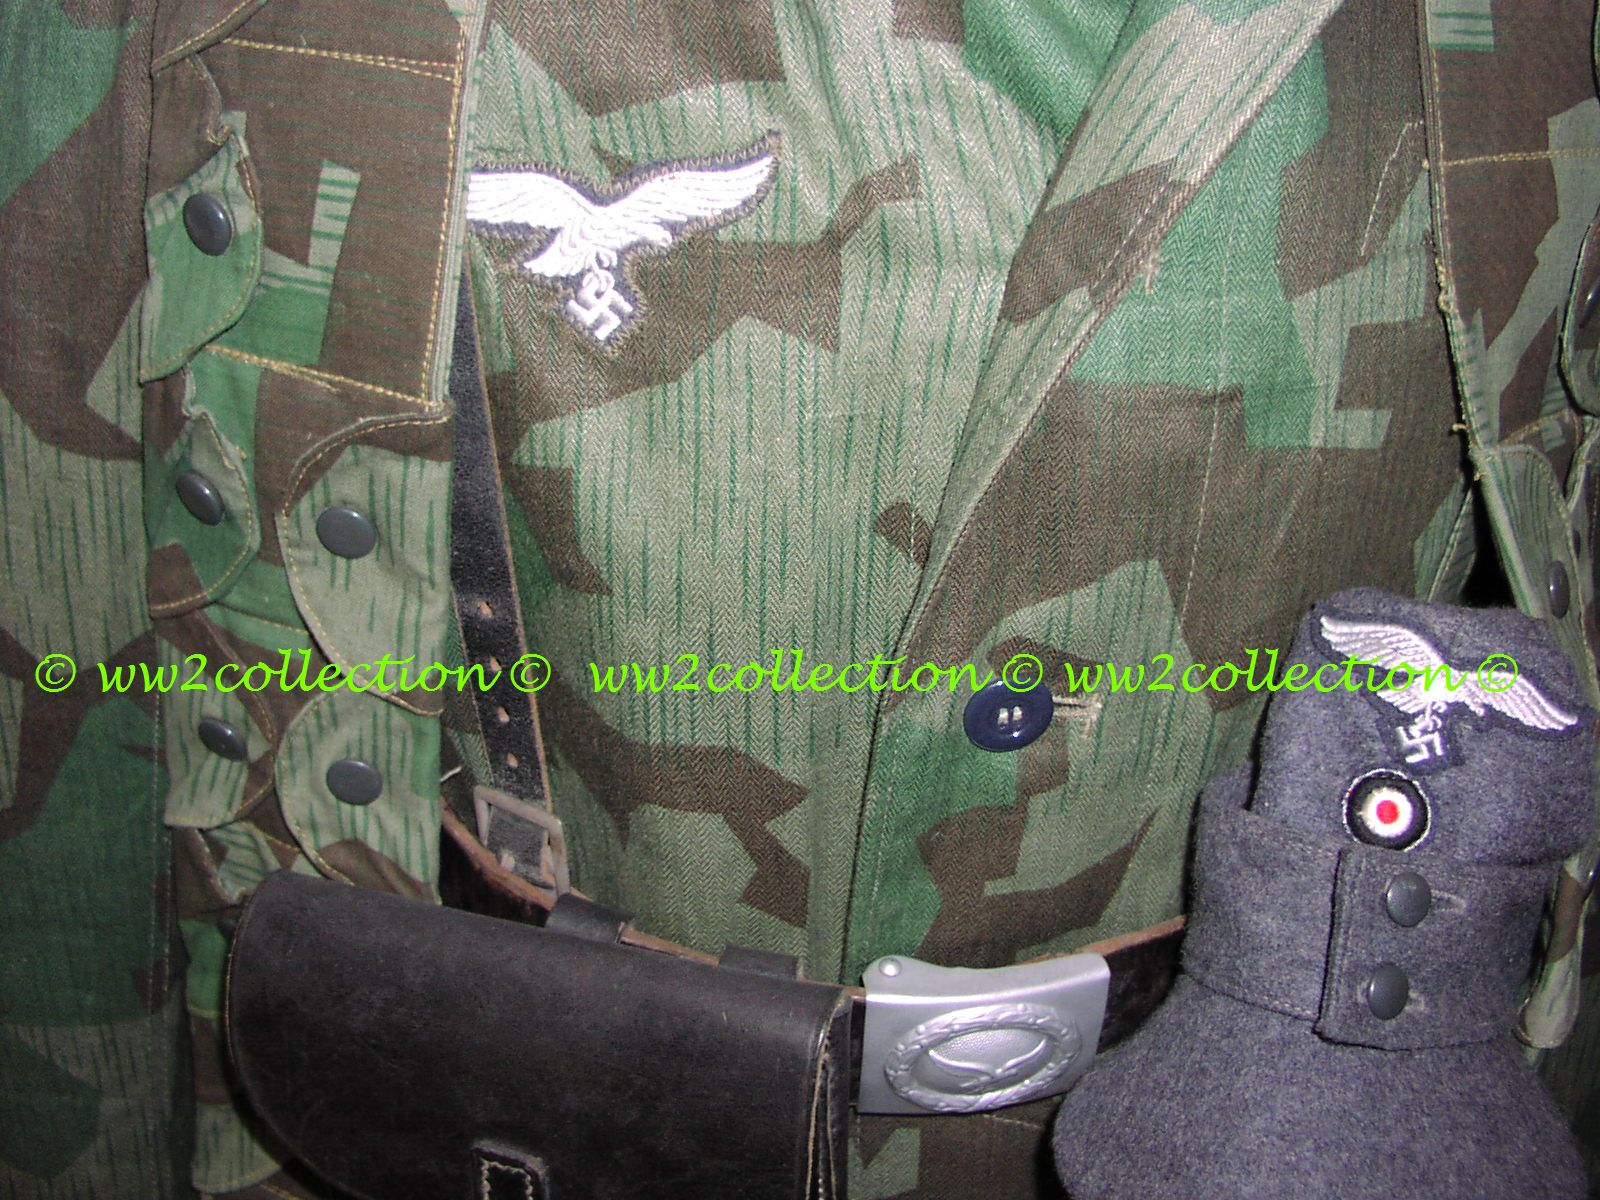 Luftwaffe camo jacket